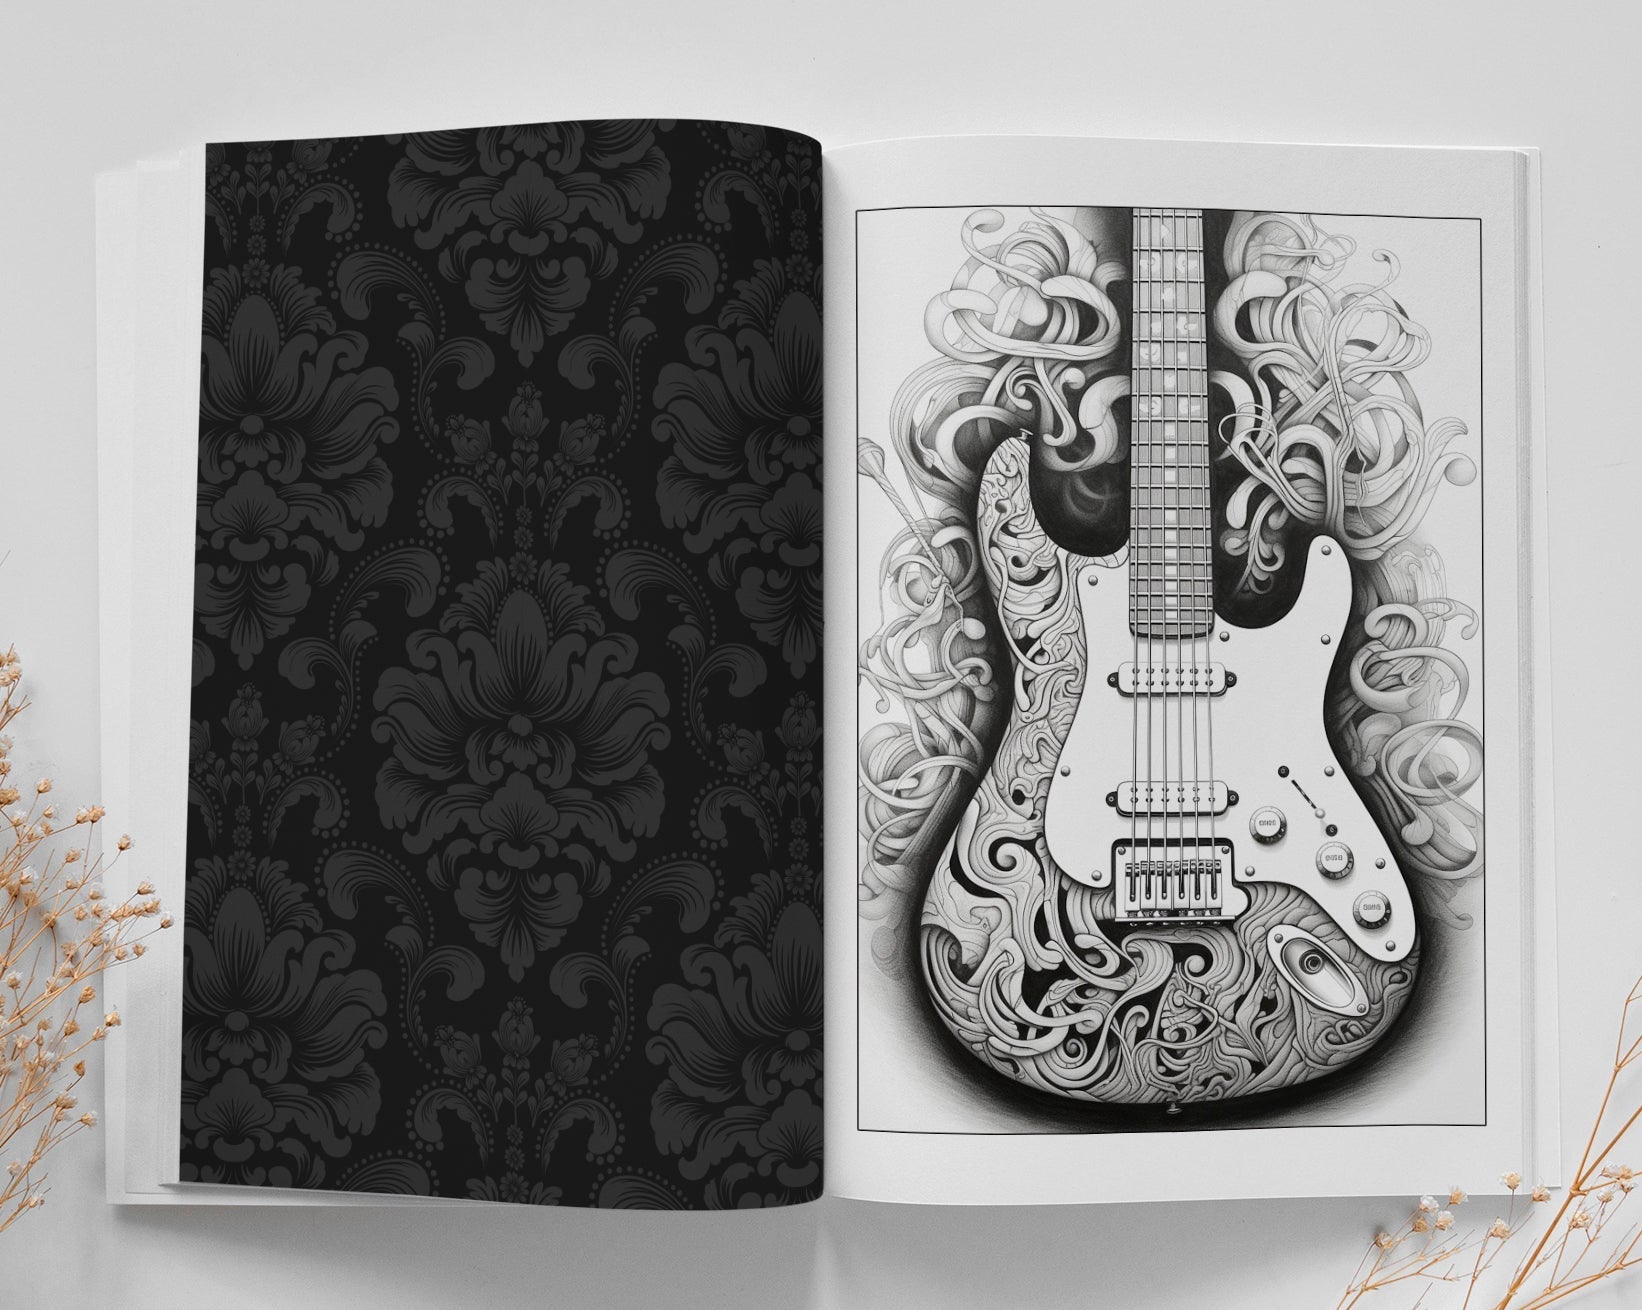 Ornamental Guitars Coloring Book Grayscale (Digital) - Monsoon Publishing USA